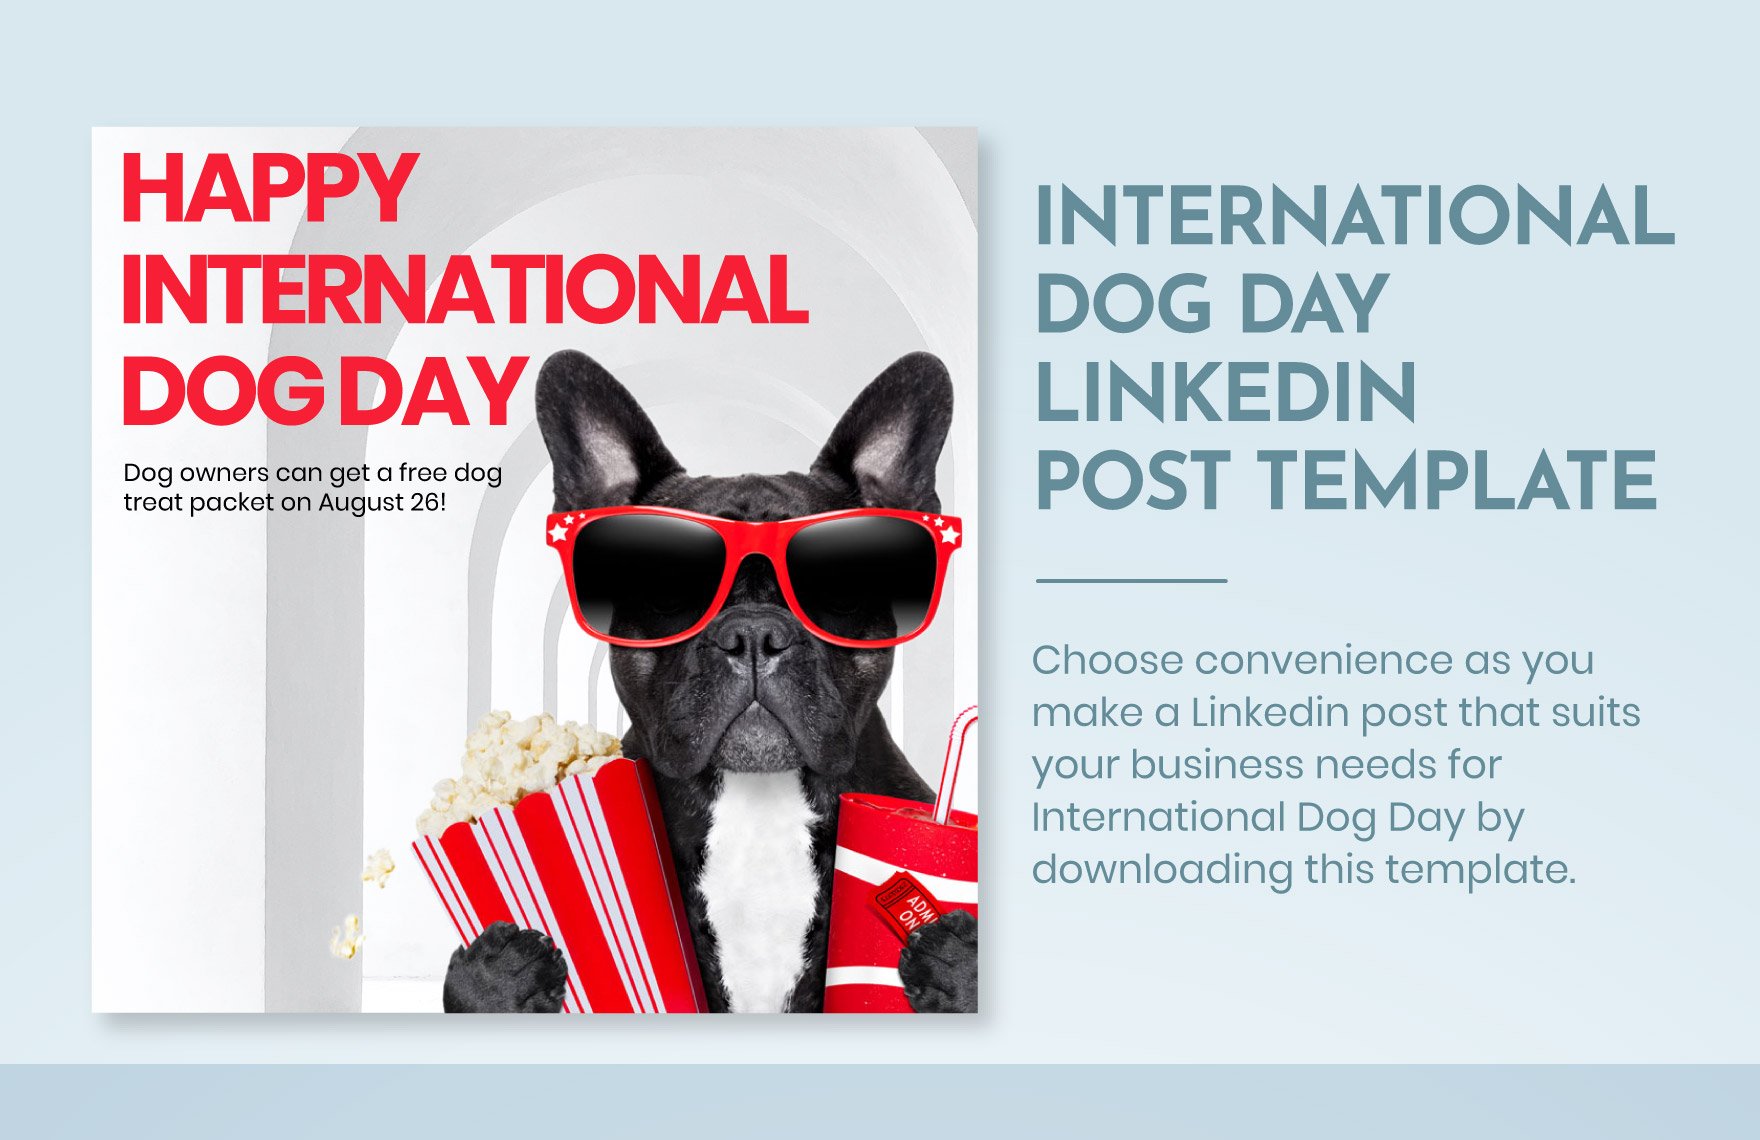 International Dog Day  LinkedIn Post Template